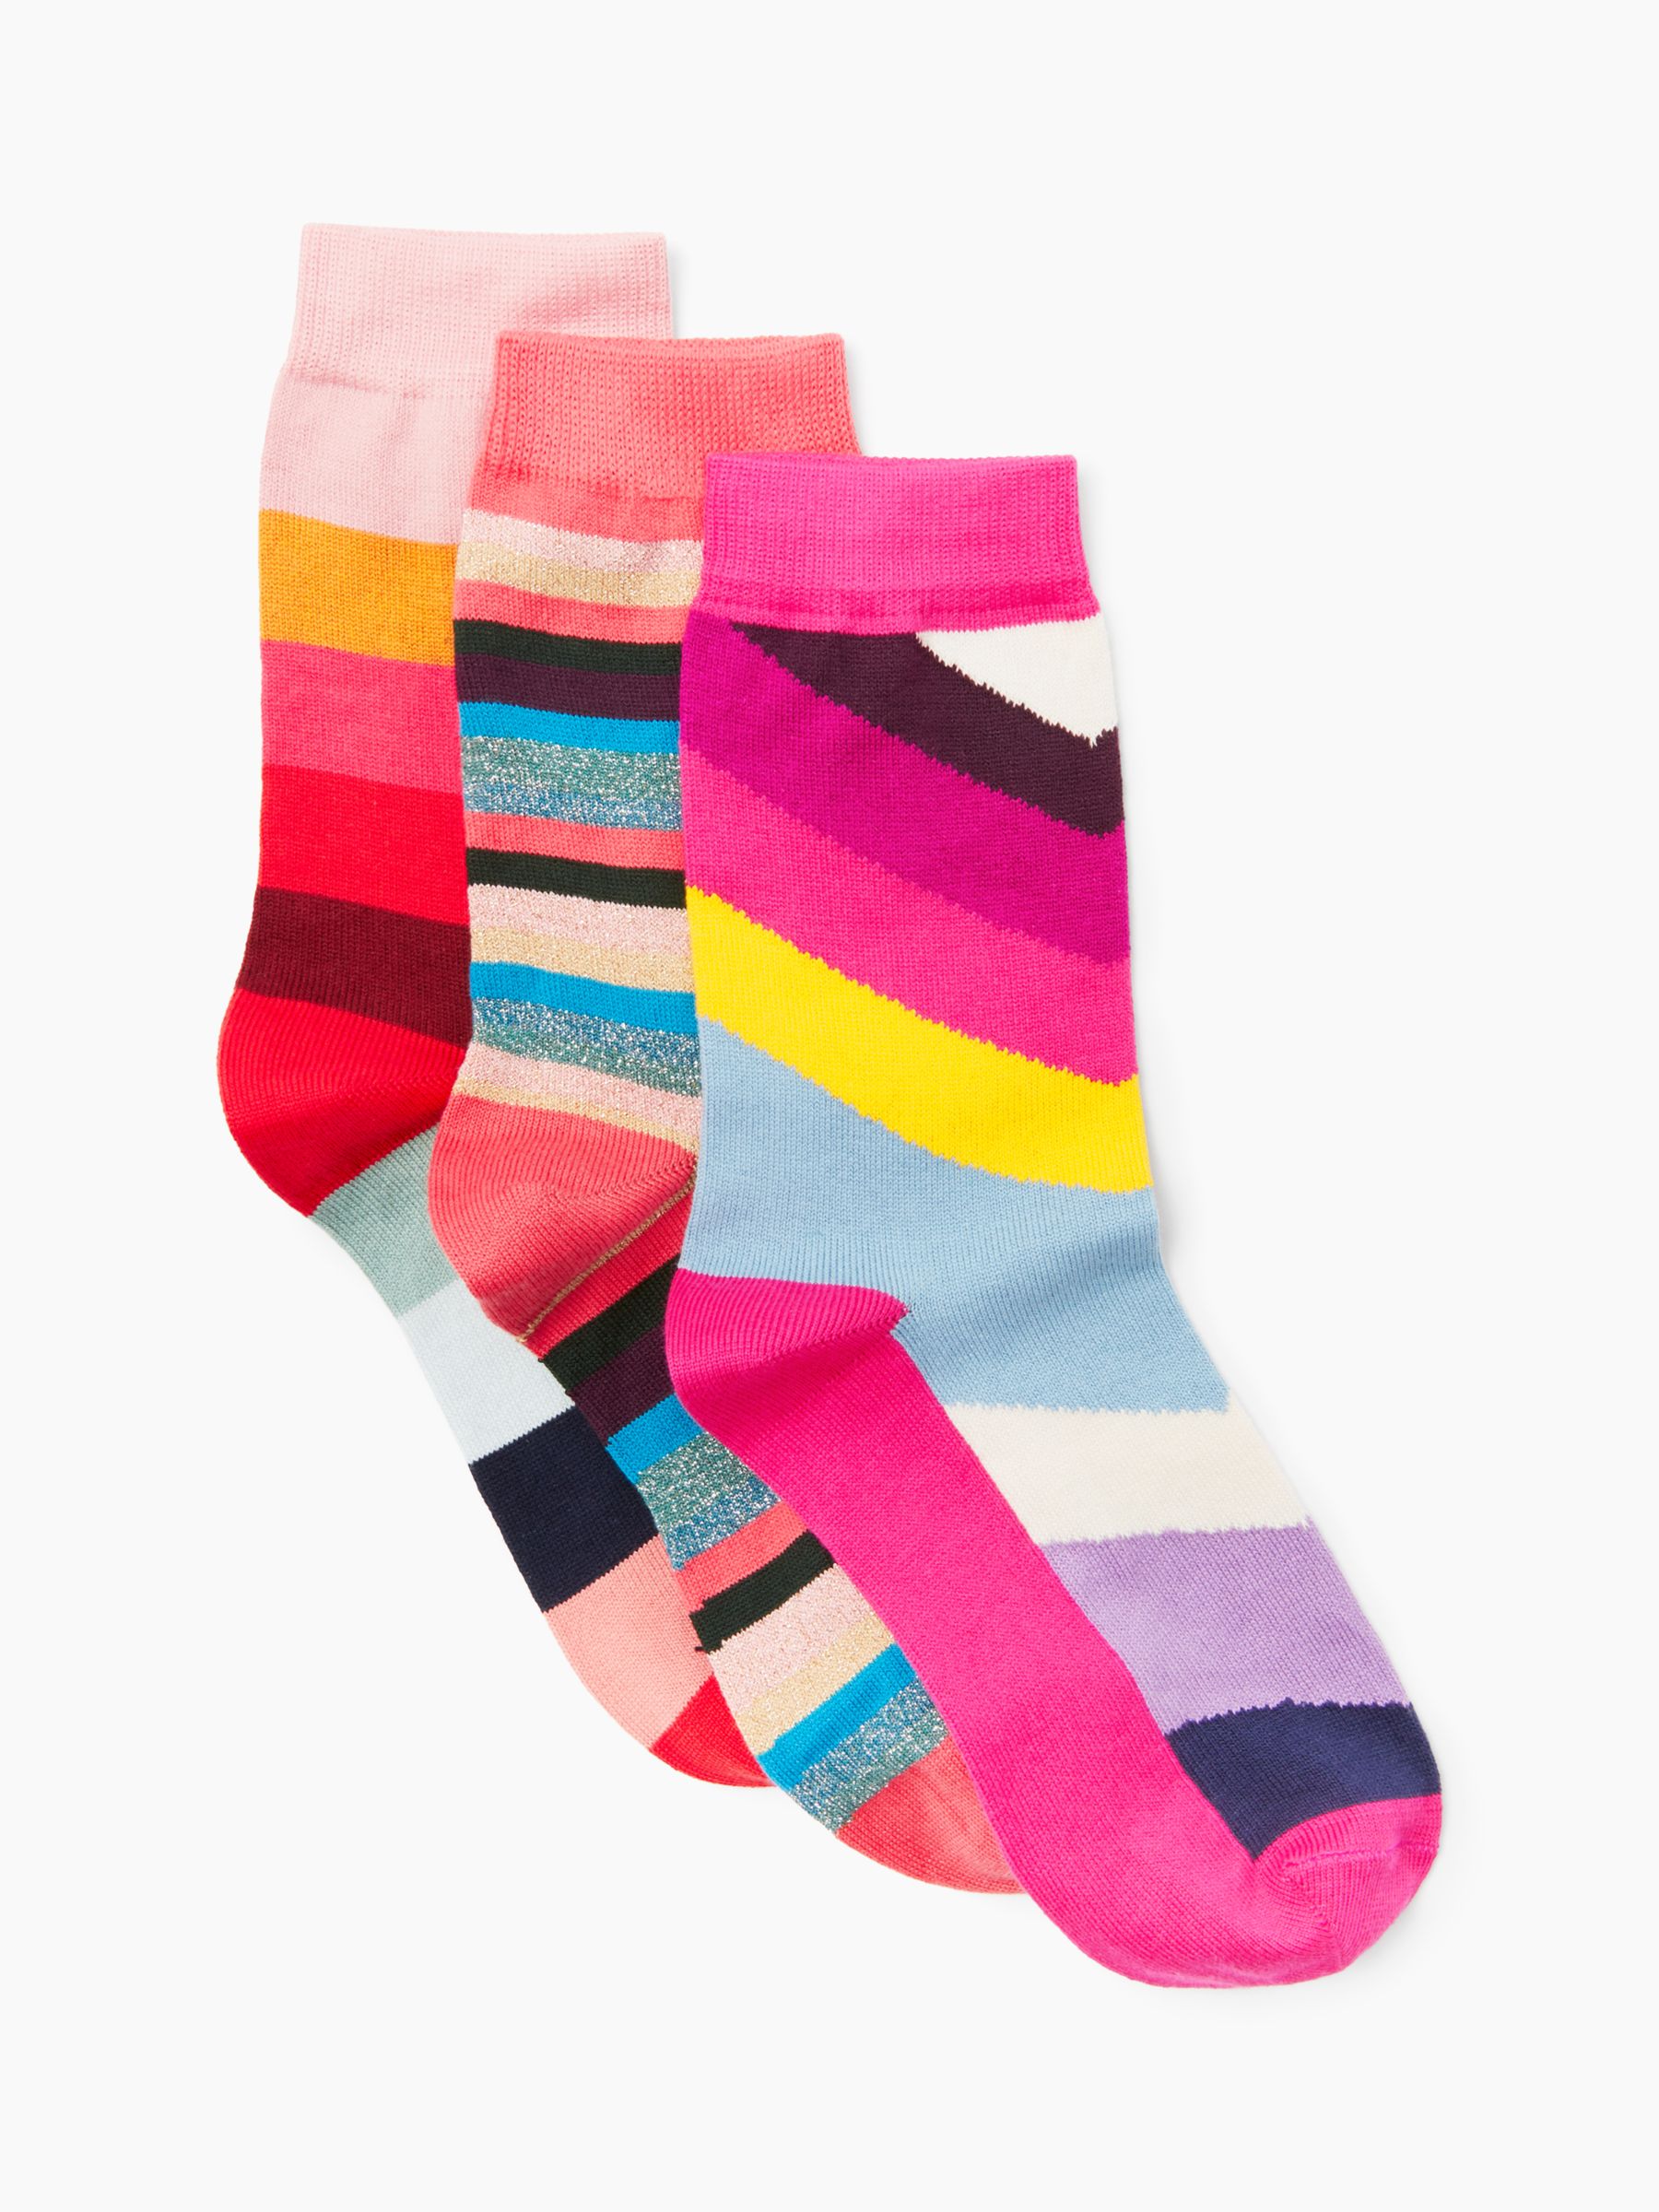 Paul Smith Swirl Stripe Ankle Socks, Pack of 3, Multi